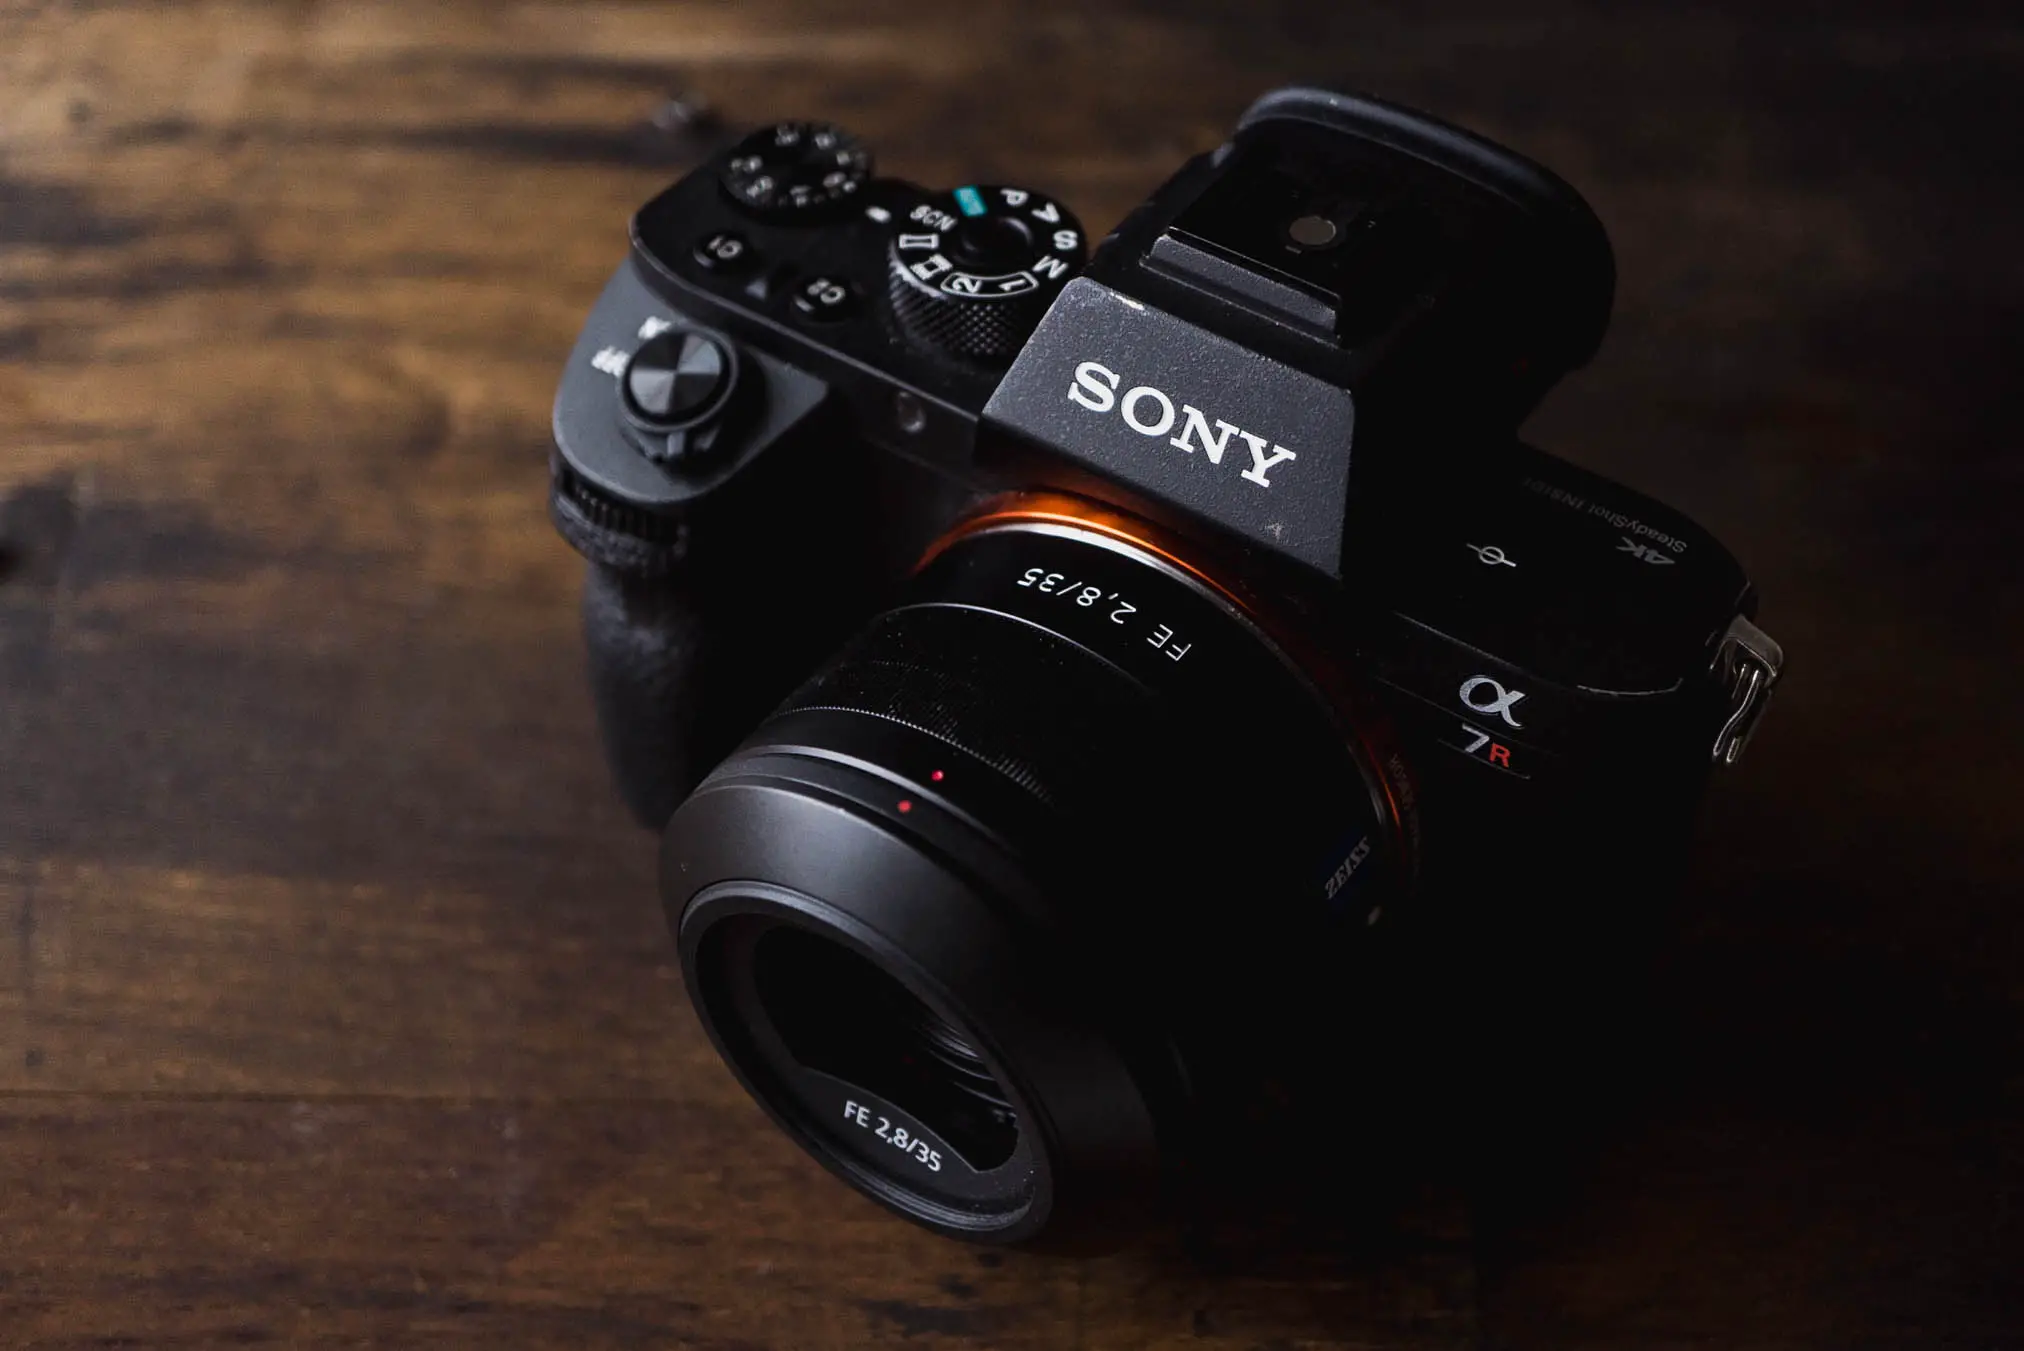 Sony A7Rii review - A superb farce of a camera - 35mmc